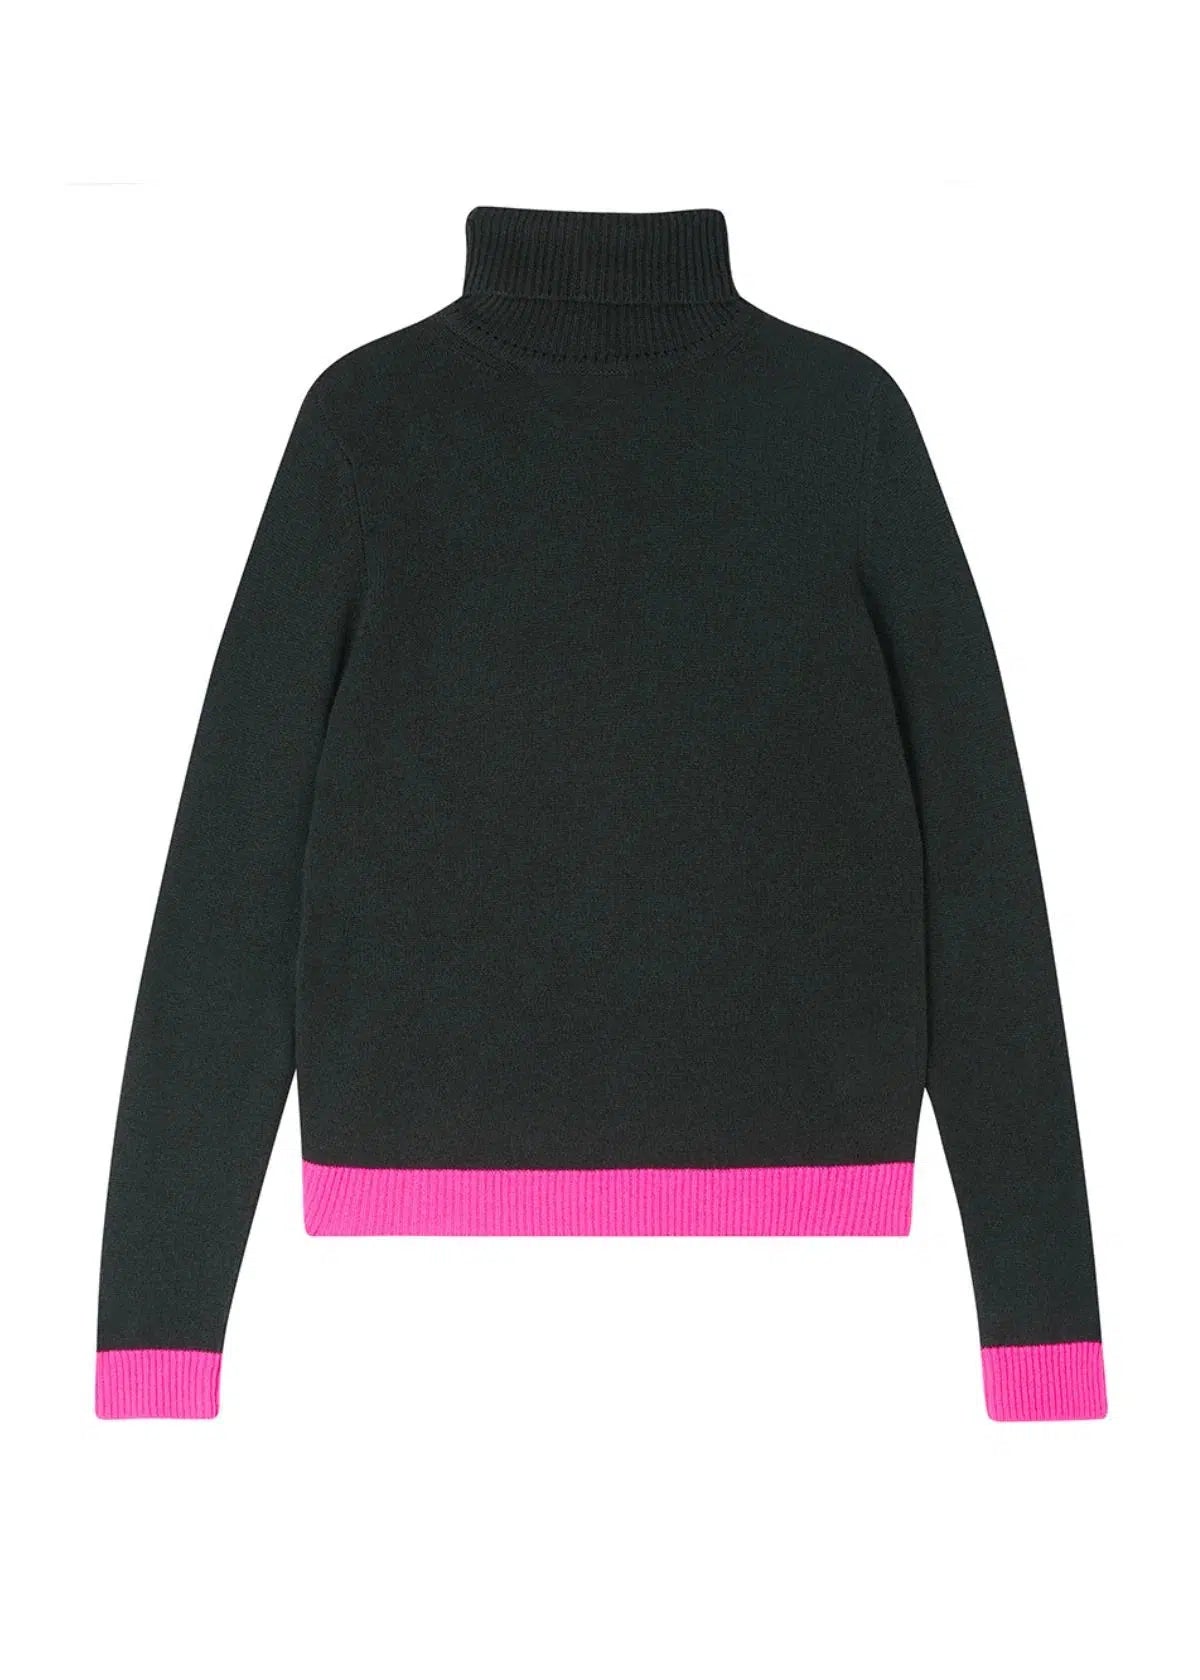 Contrast Roll Collar V4-Sweater-Jumper1234-Debs Boutique